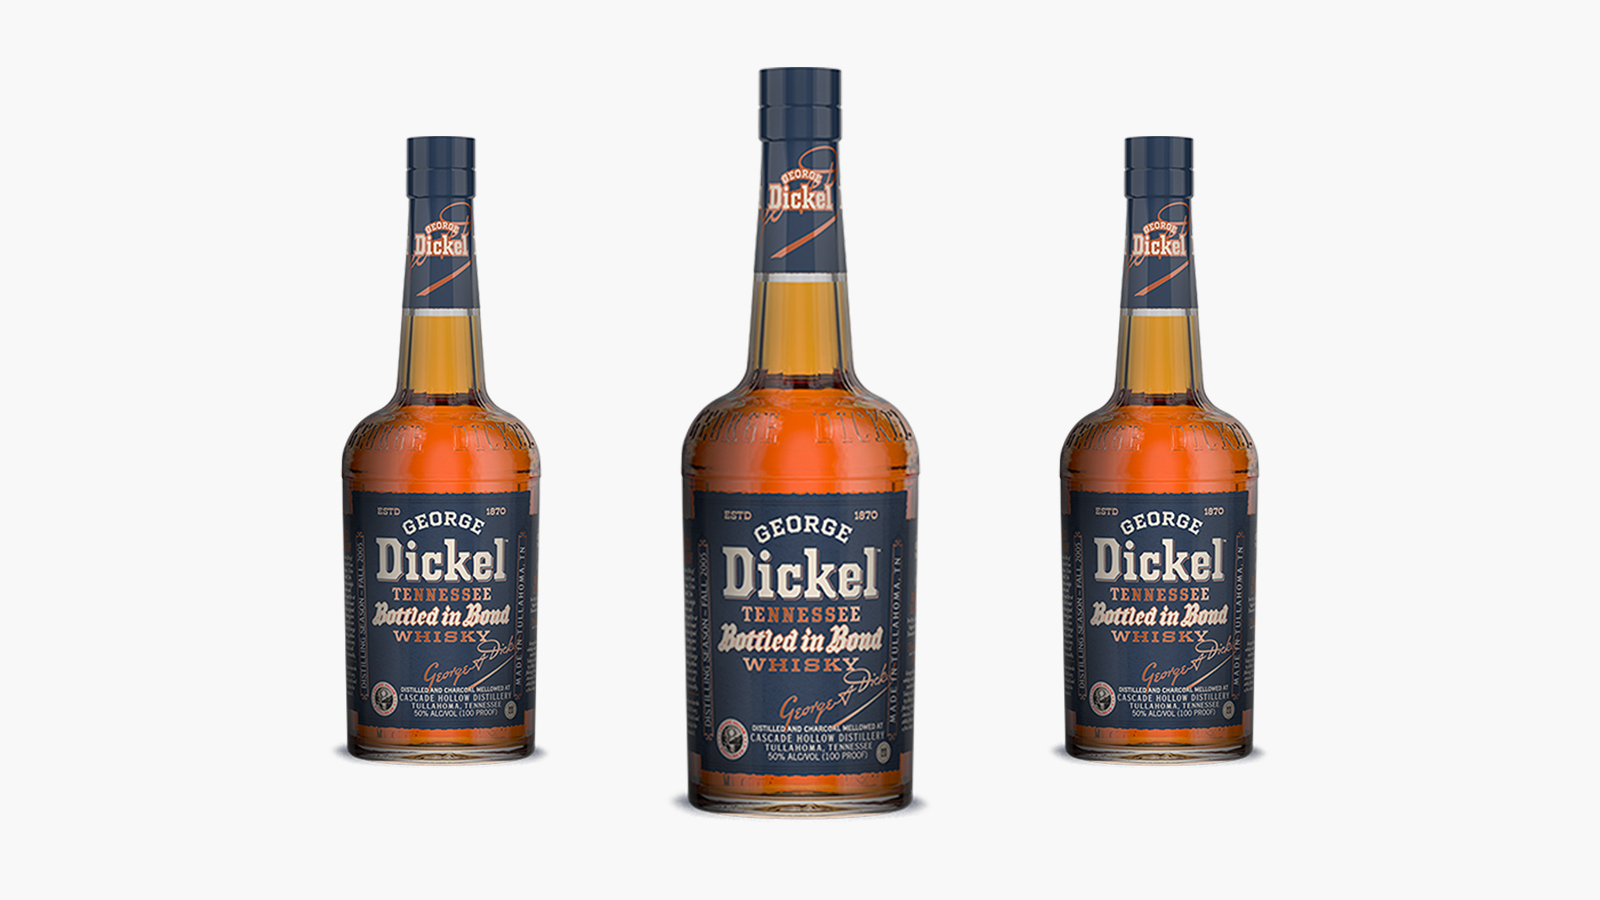 George Dickel Bottled in Bond Whisky